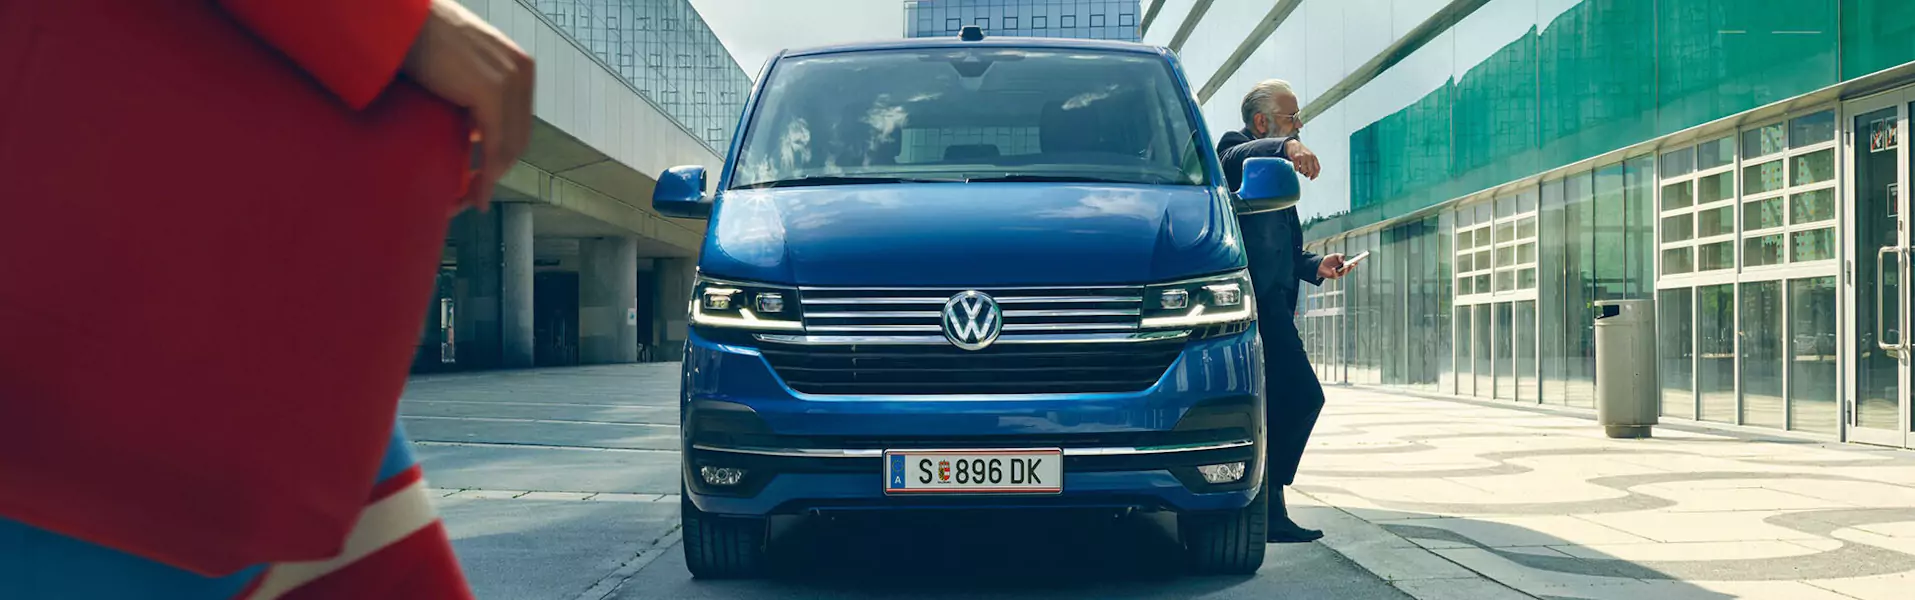 Volkswagen caravelle carrinha de transporte de passageiros